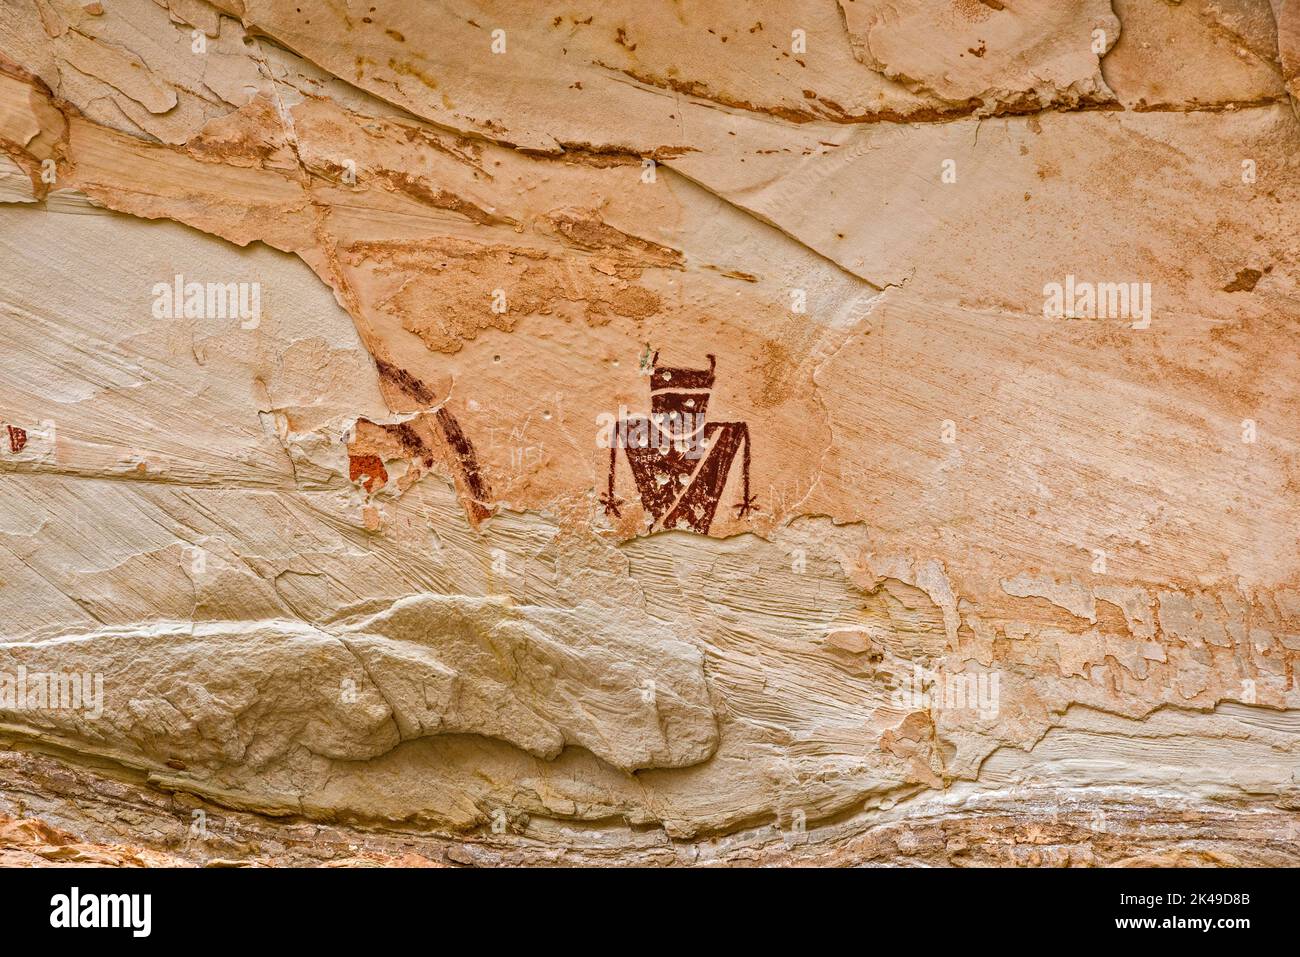 Panel Pictográfico Temple Mountain Wash, figura antropomórfica de la cultura Fremont, San Rafael Reef Wilderness, Utah, EE.UU Foto de stock